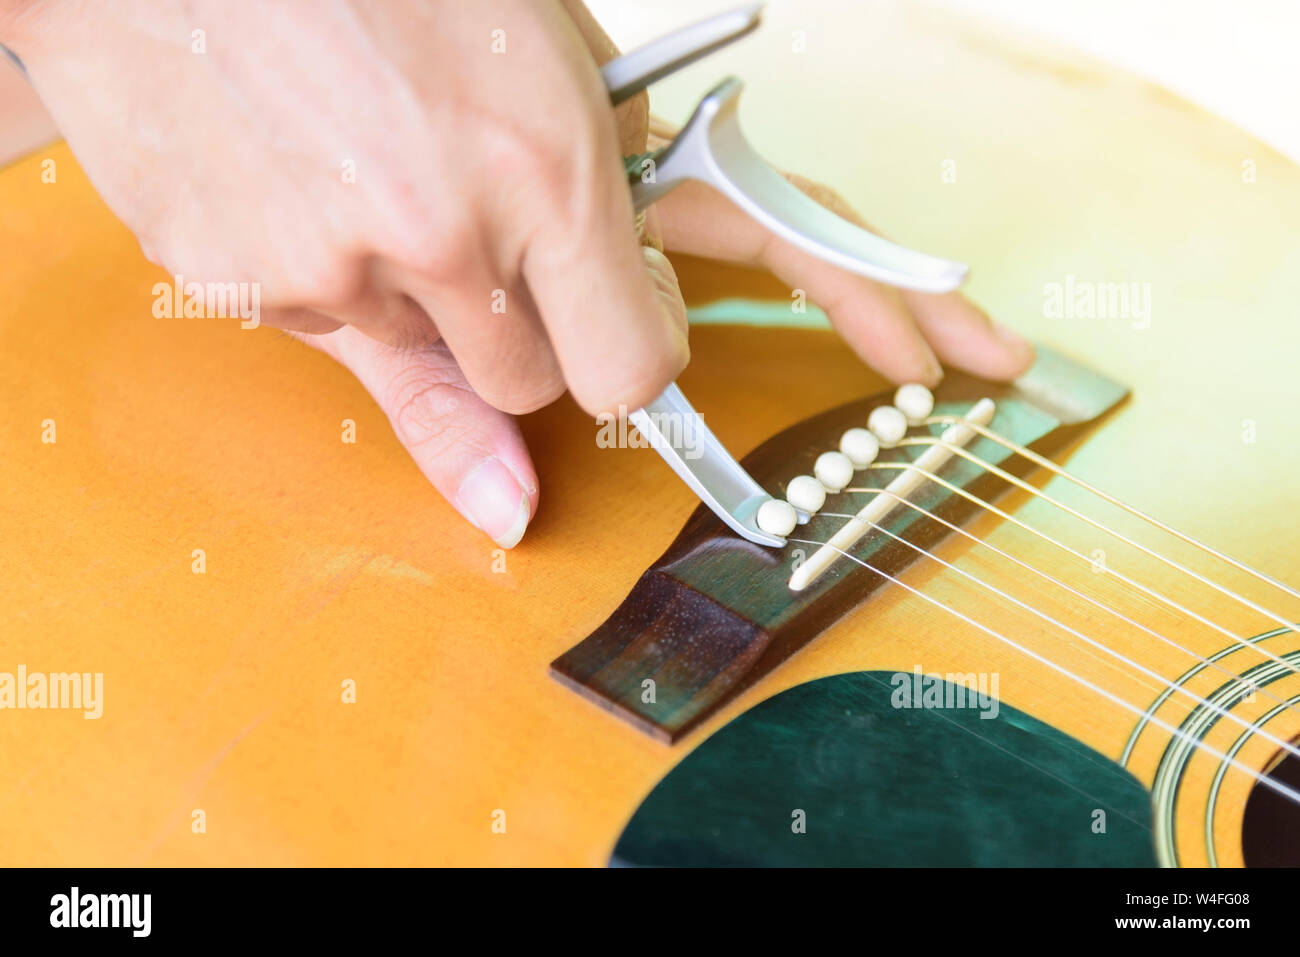 Remove acoustic guitar bridge pin by capo options Stock Photo ...